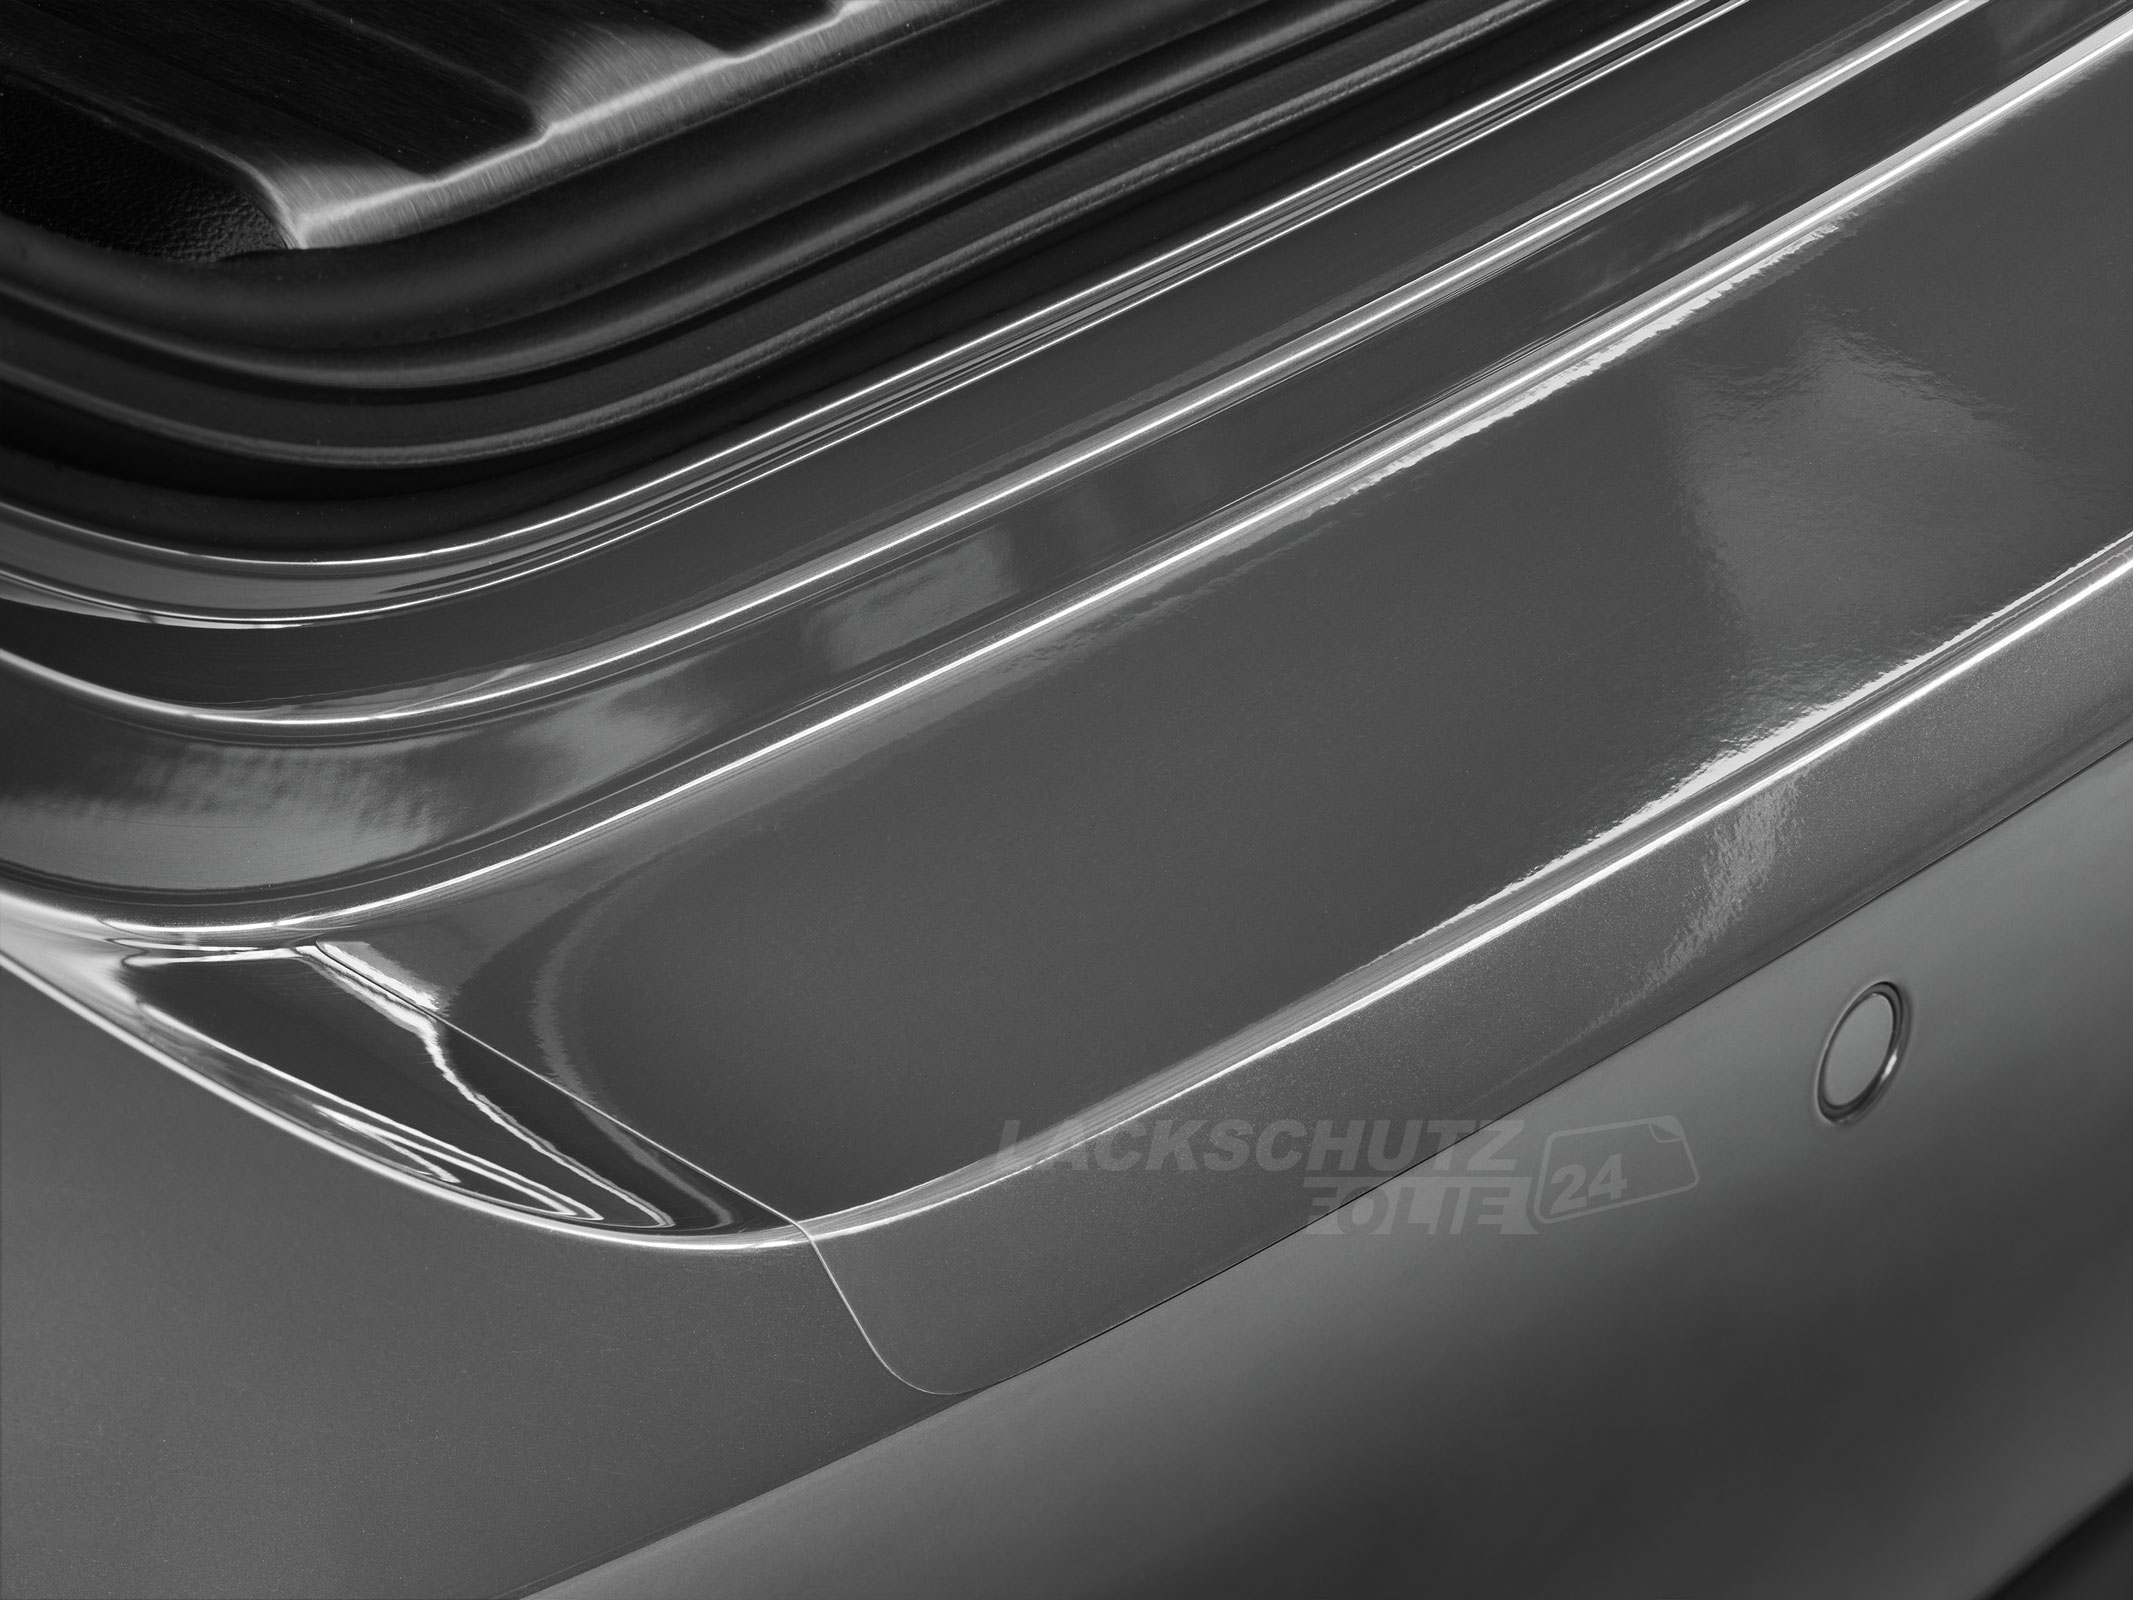 Ladekantenschutzfolie - Transparent Glatt Hochglänzend 150 µm stark für Hyundai Matrix 2. Facelift, BJ 2008-2010